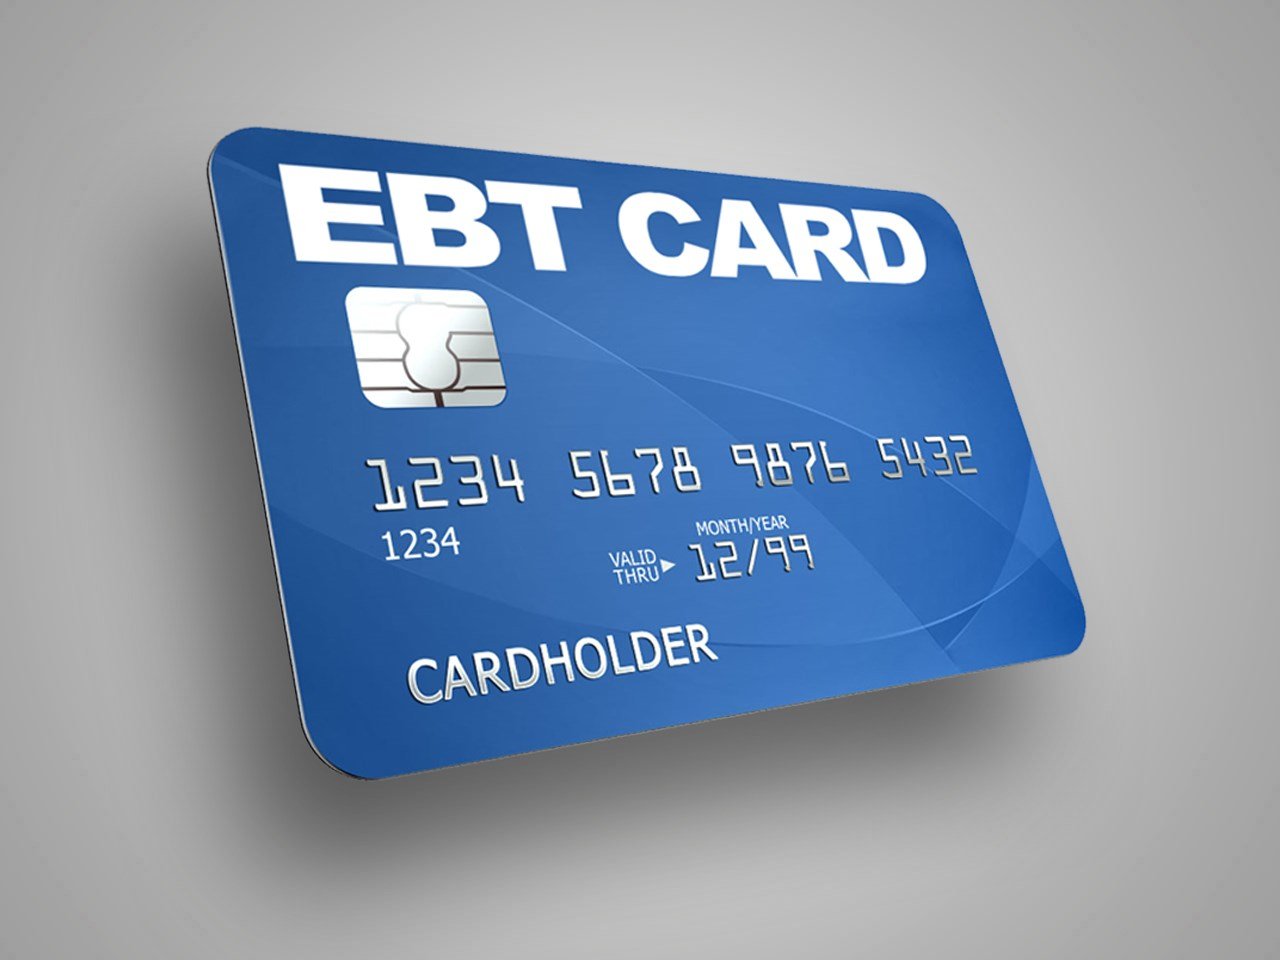 How Do I Order A New Ebt Card